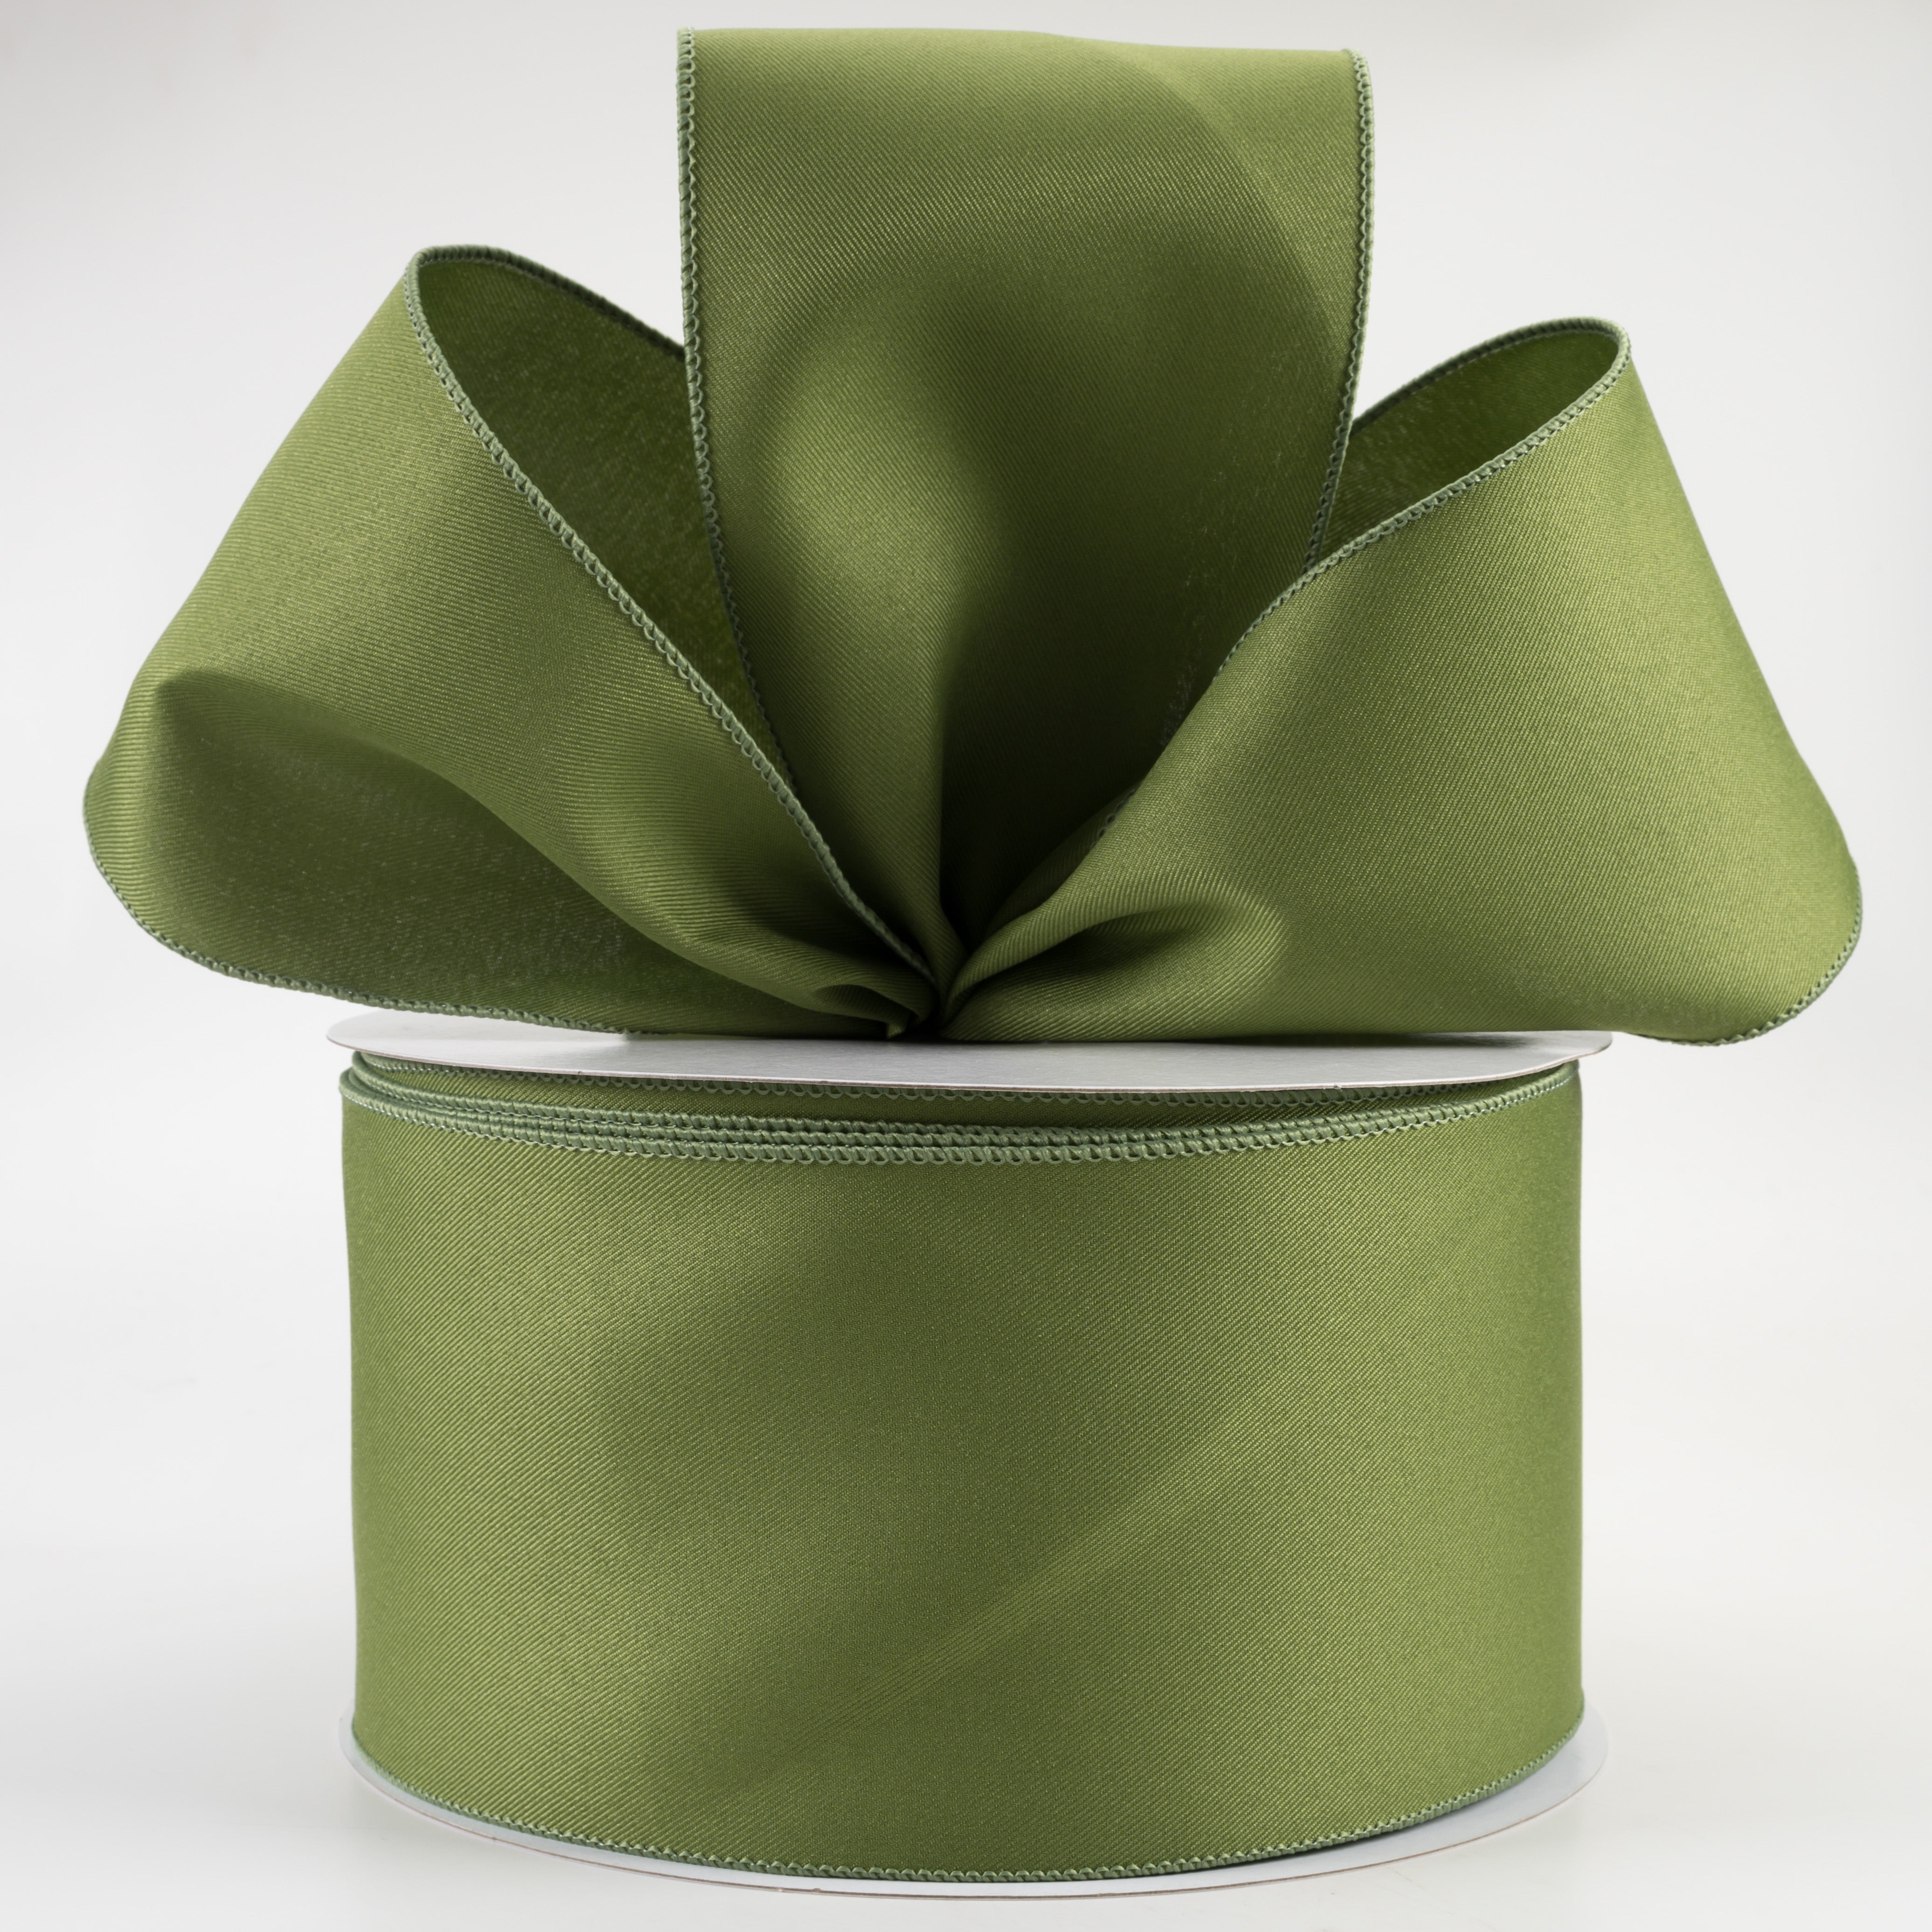 4" Diagonal Weave Fabric Ribbon: Moss Green (50 Yards)